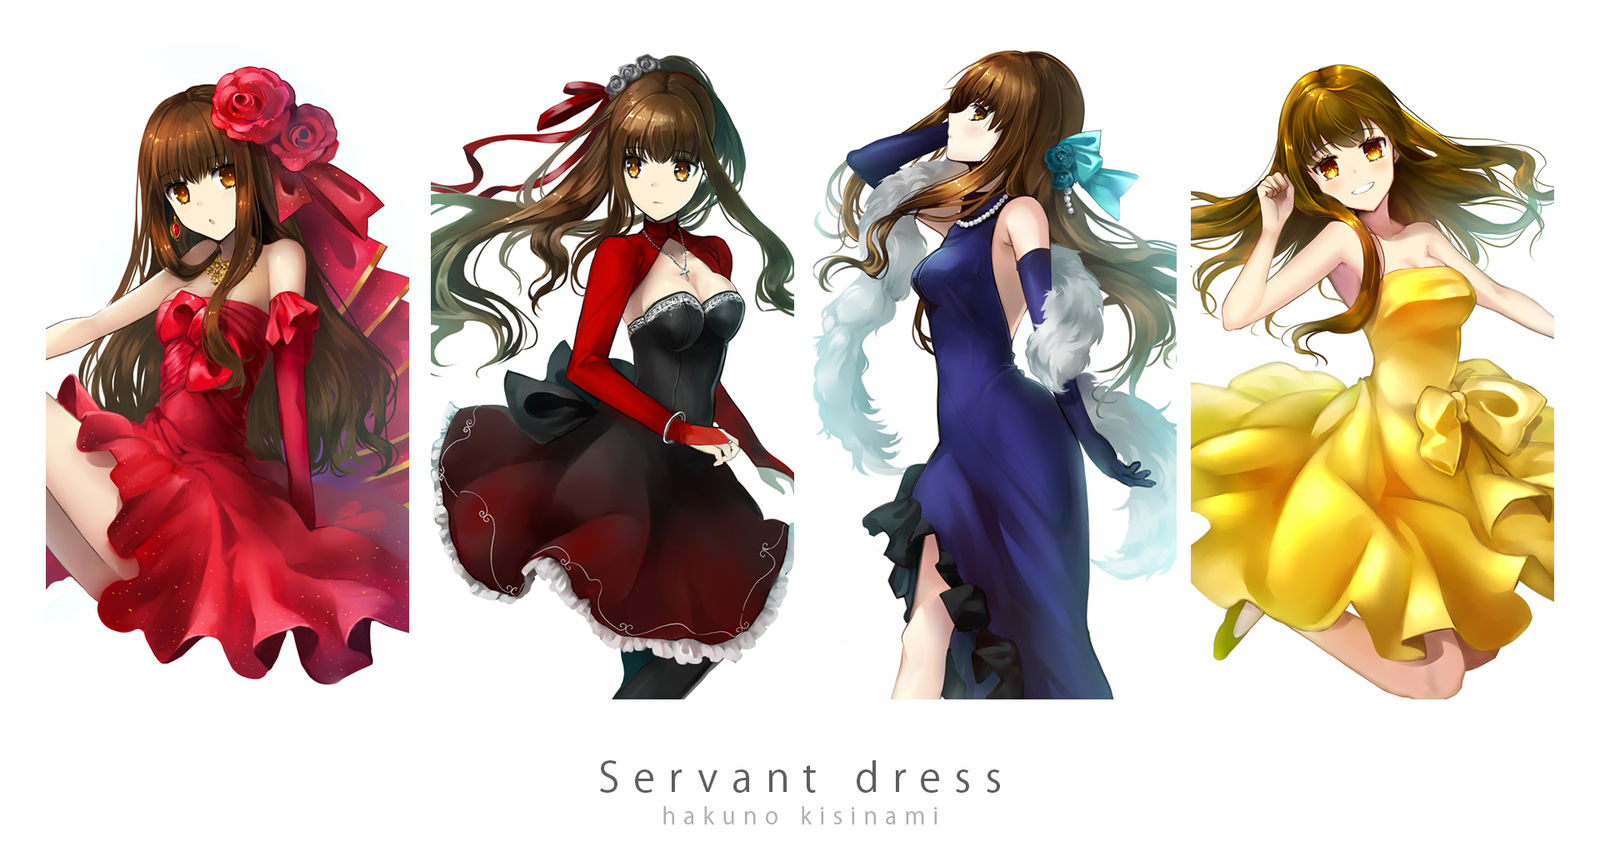 servant dress插画图片壁纸